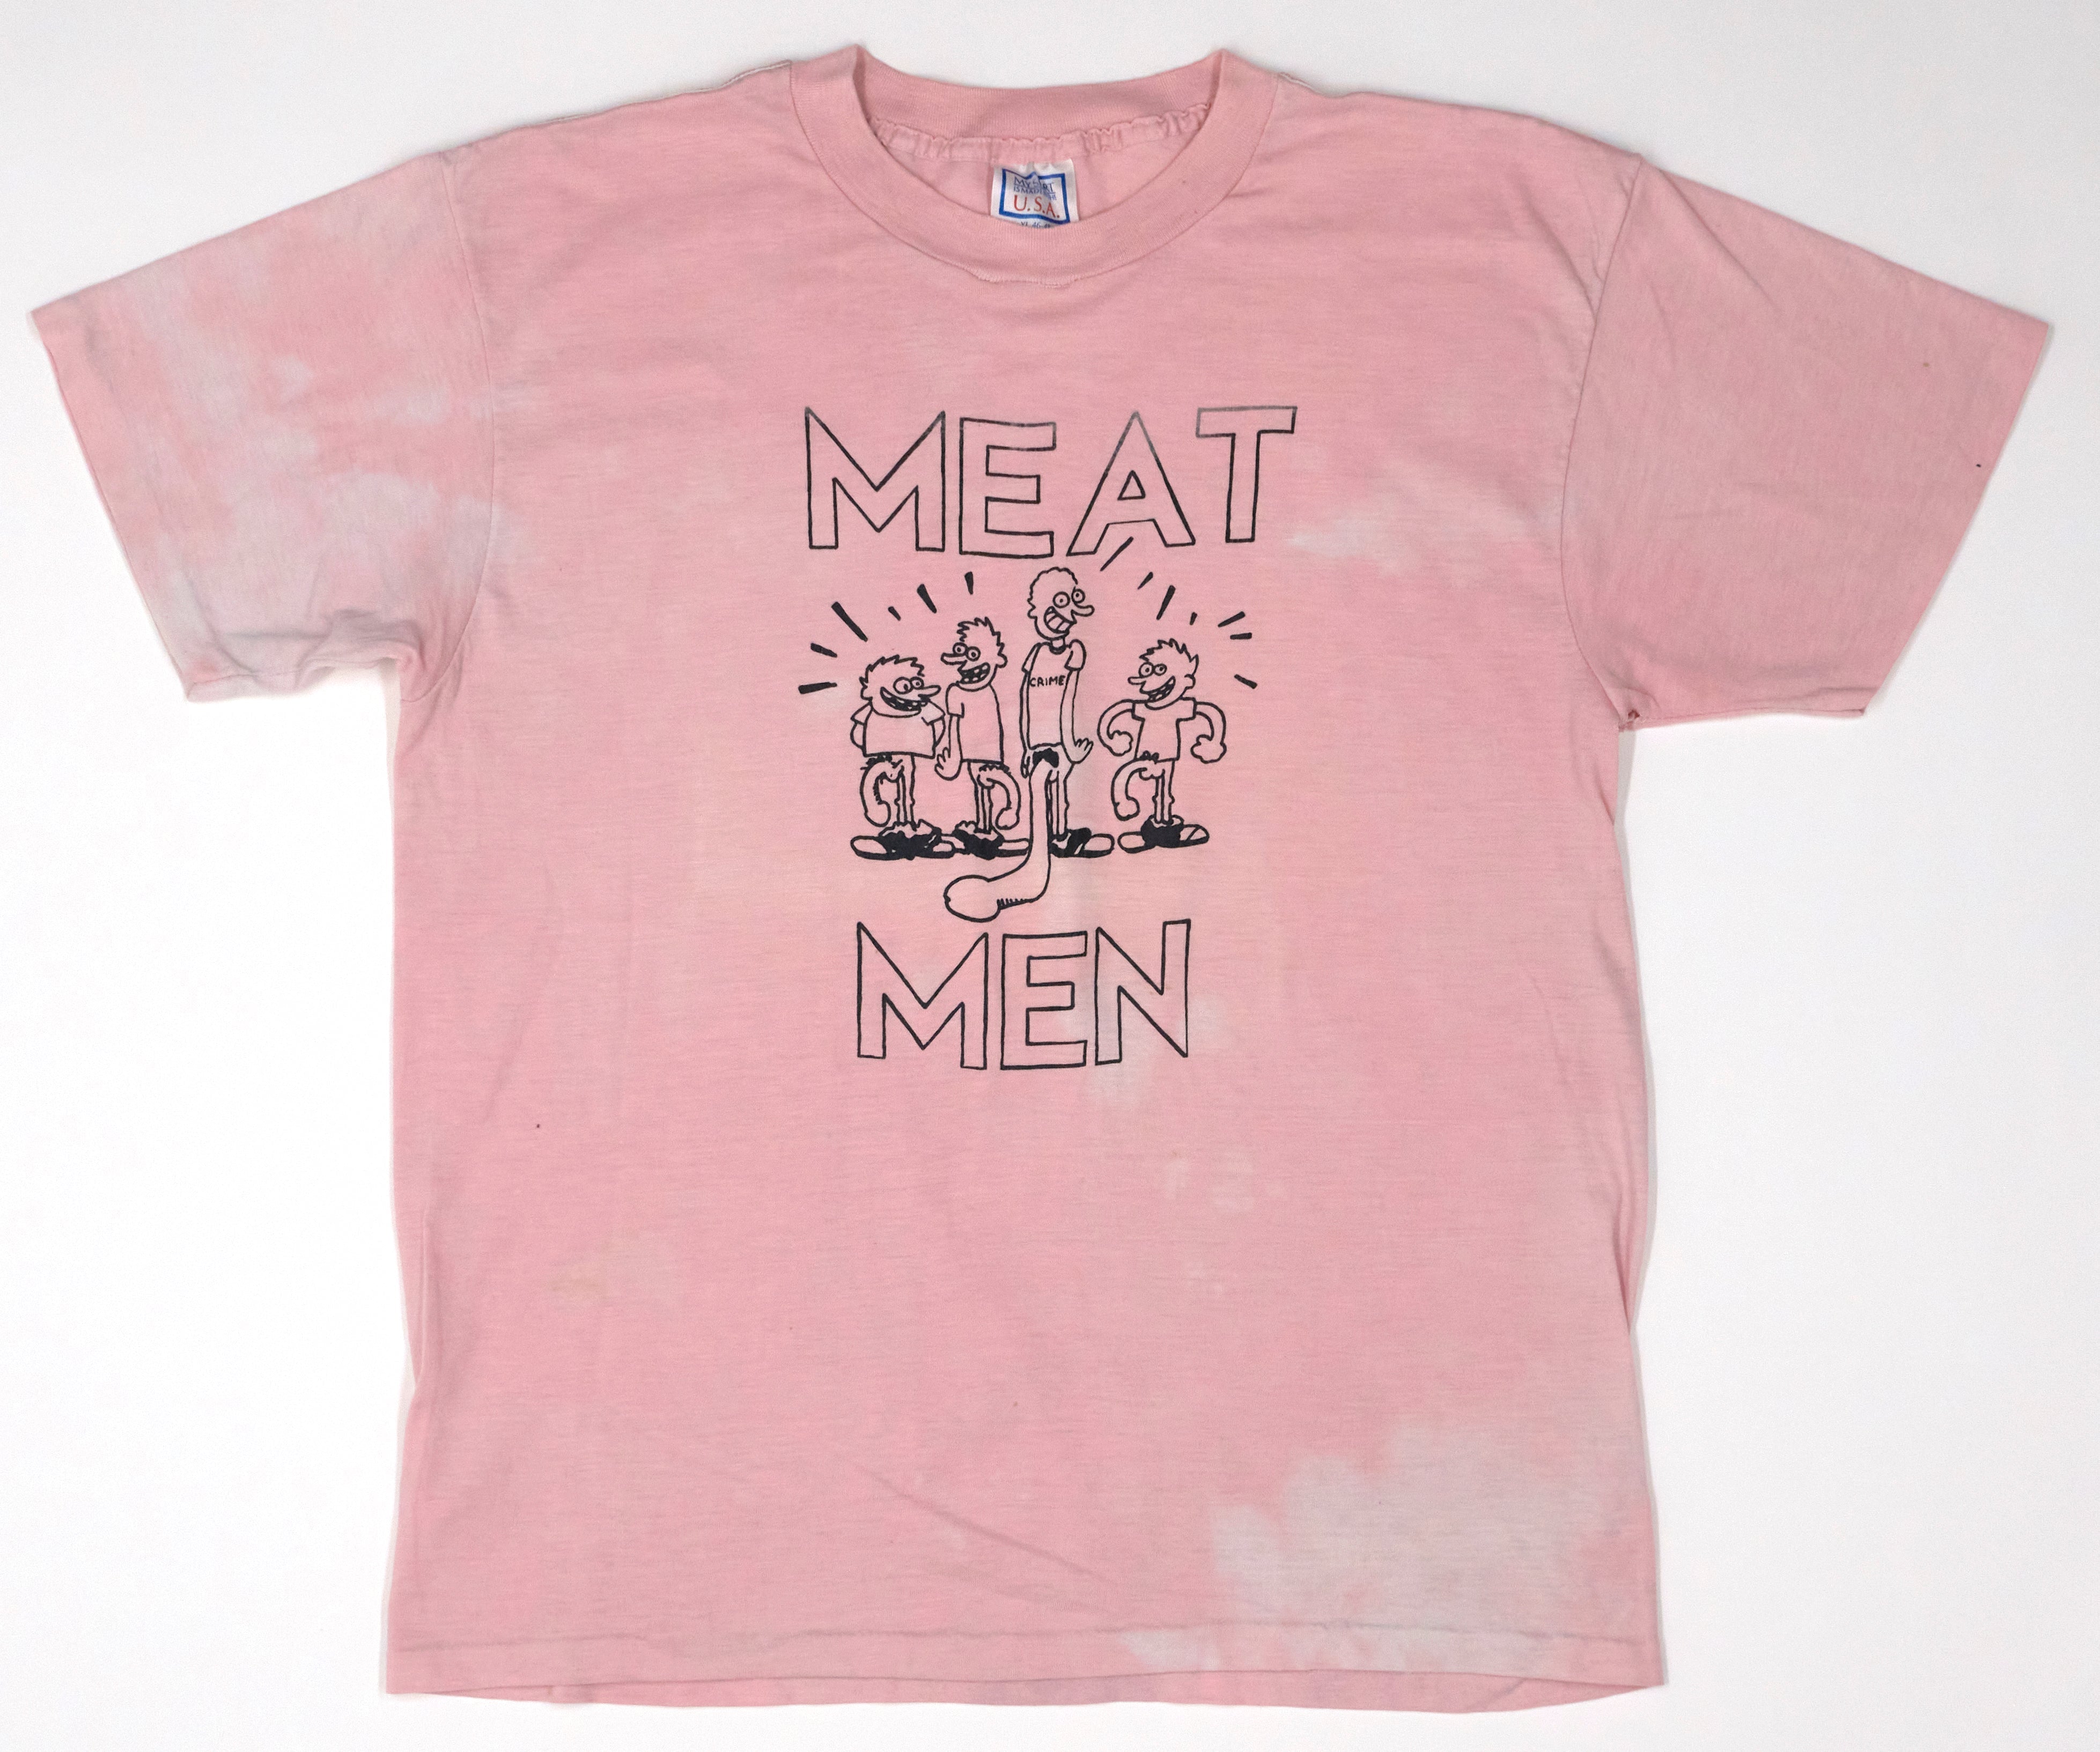 Meatmen - Stud Powercock 1/C Tour Shirt Size XL